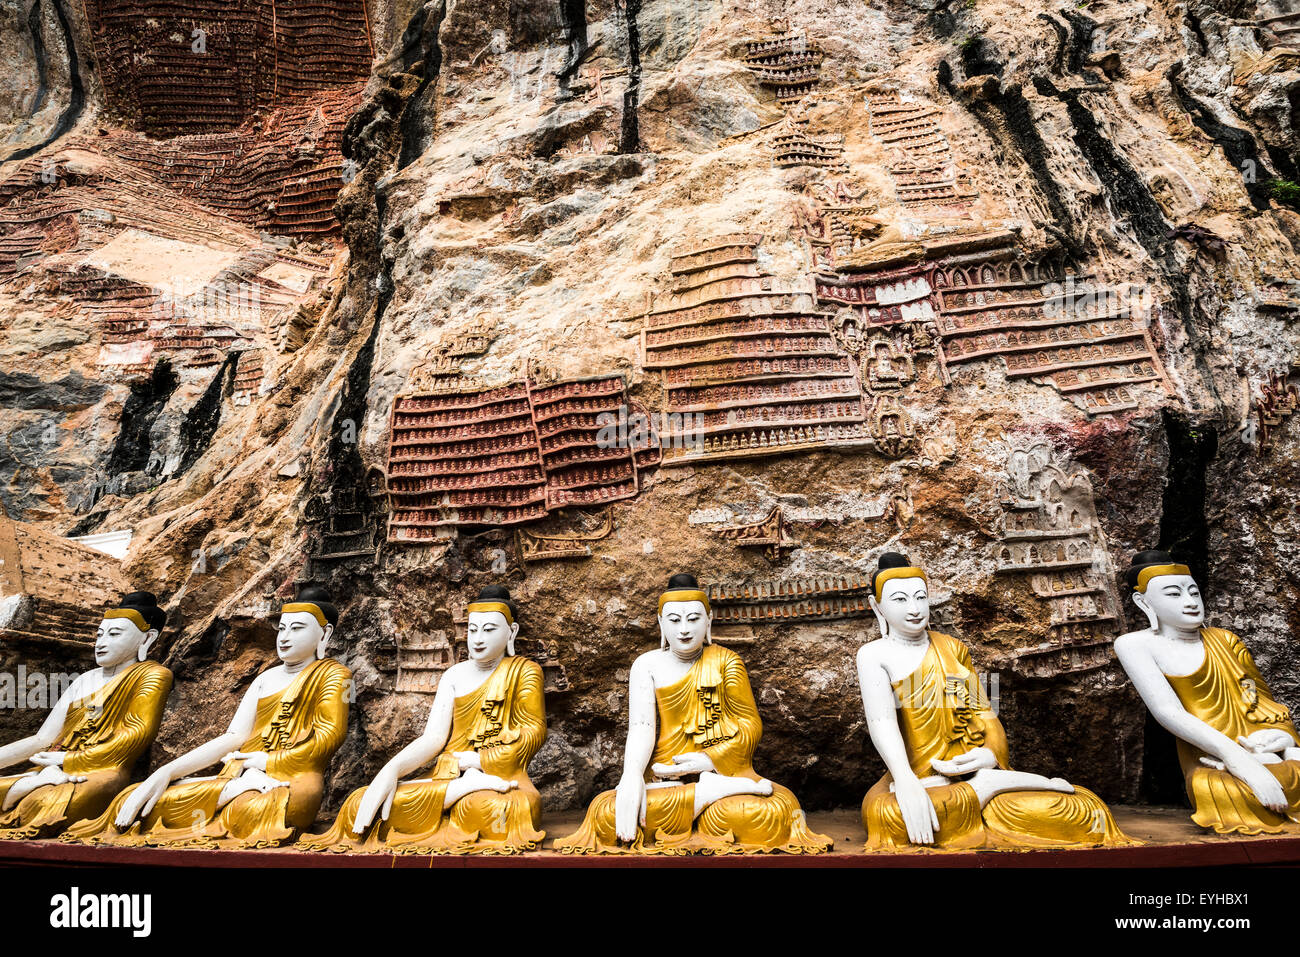 Seated Buddha statues, Kawgun cave, Hpa-an, Karen or Kayin State, Myanmar, Myanmar Stock Photo